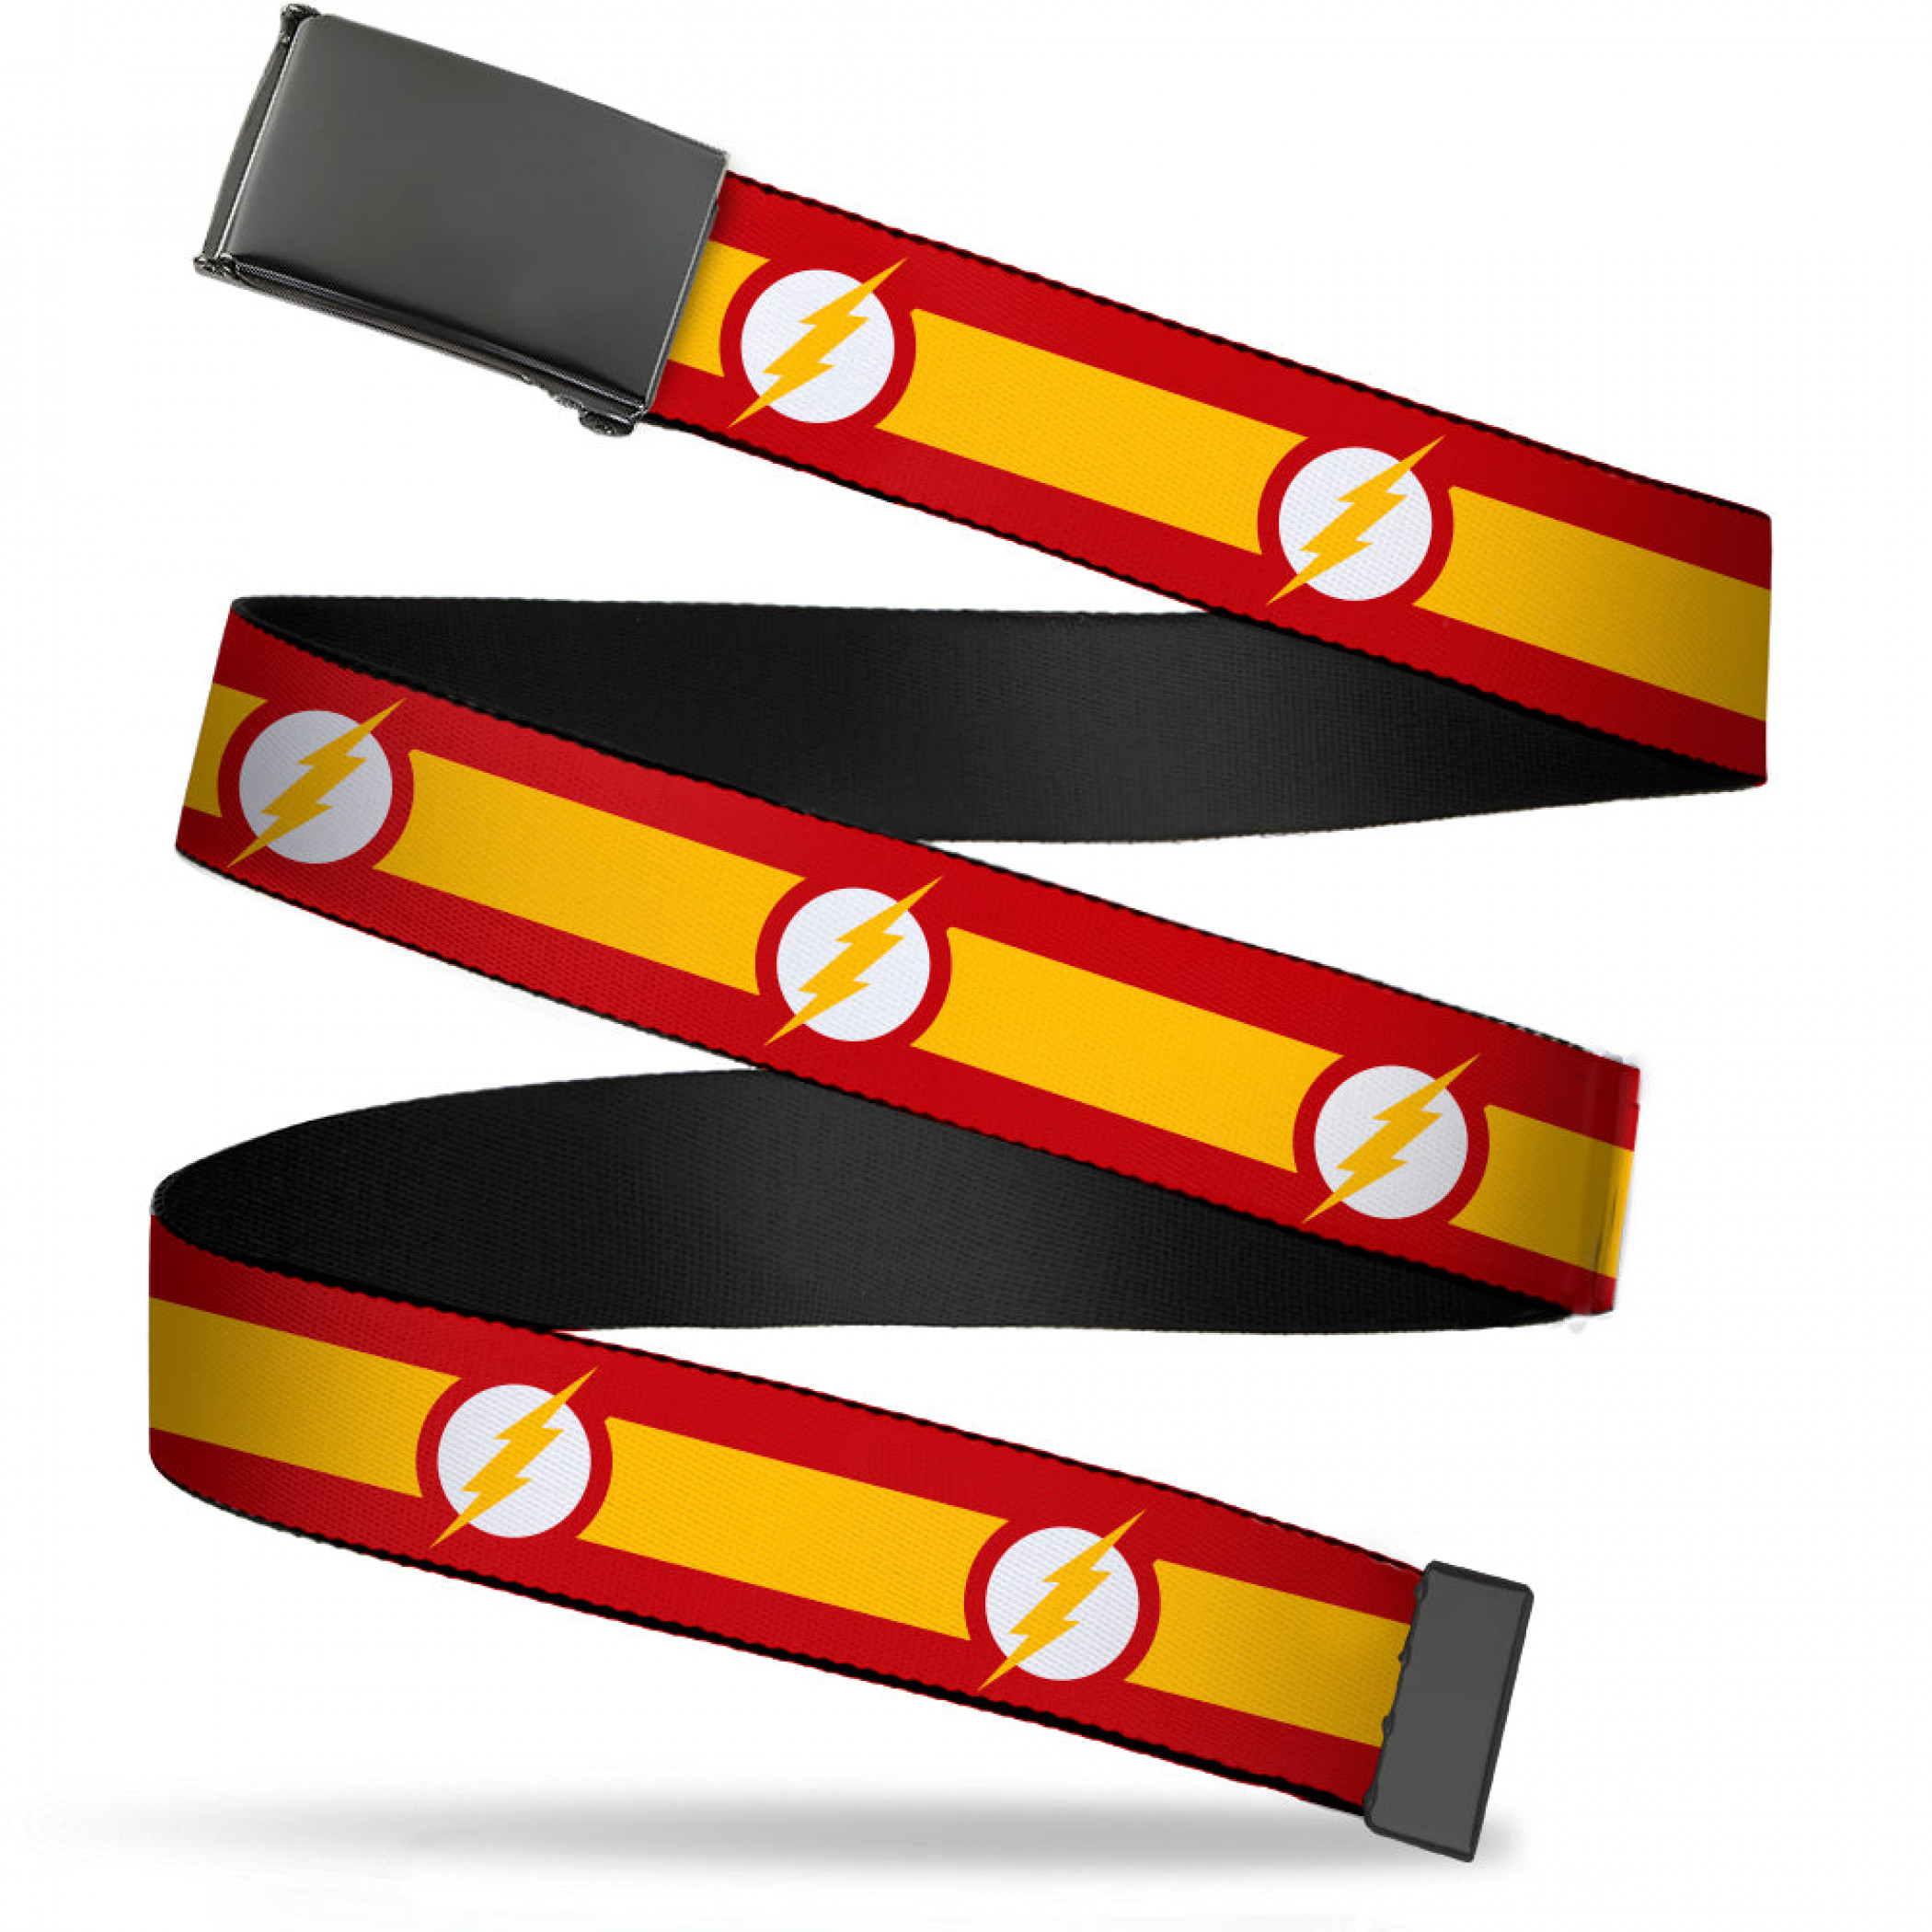 The Flash Logo Striped Web Belt